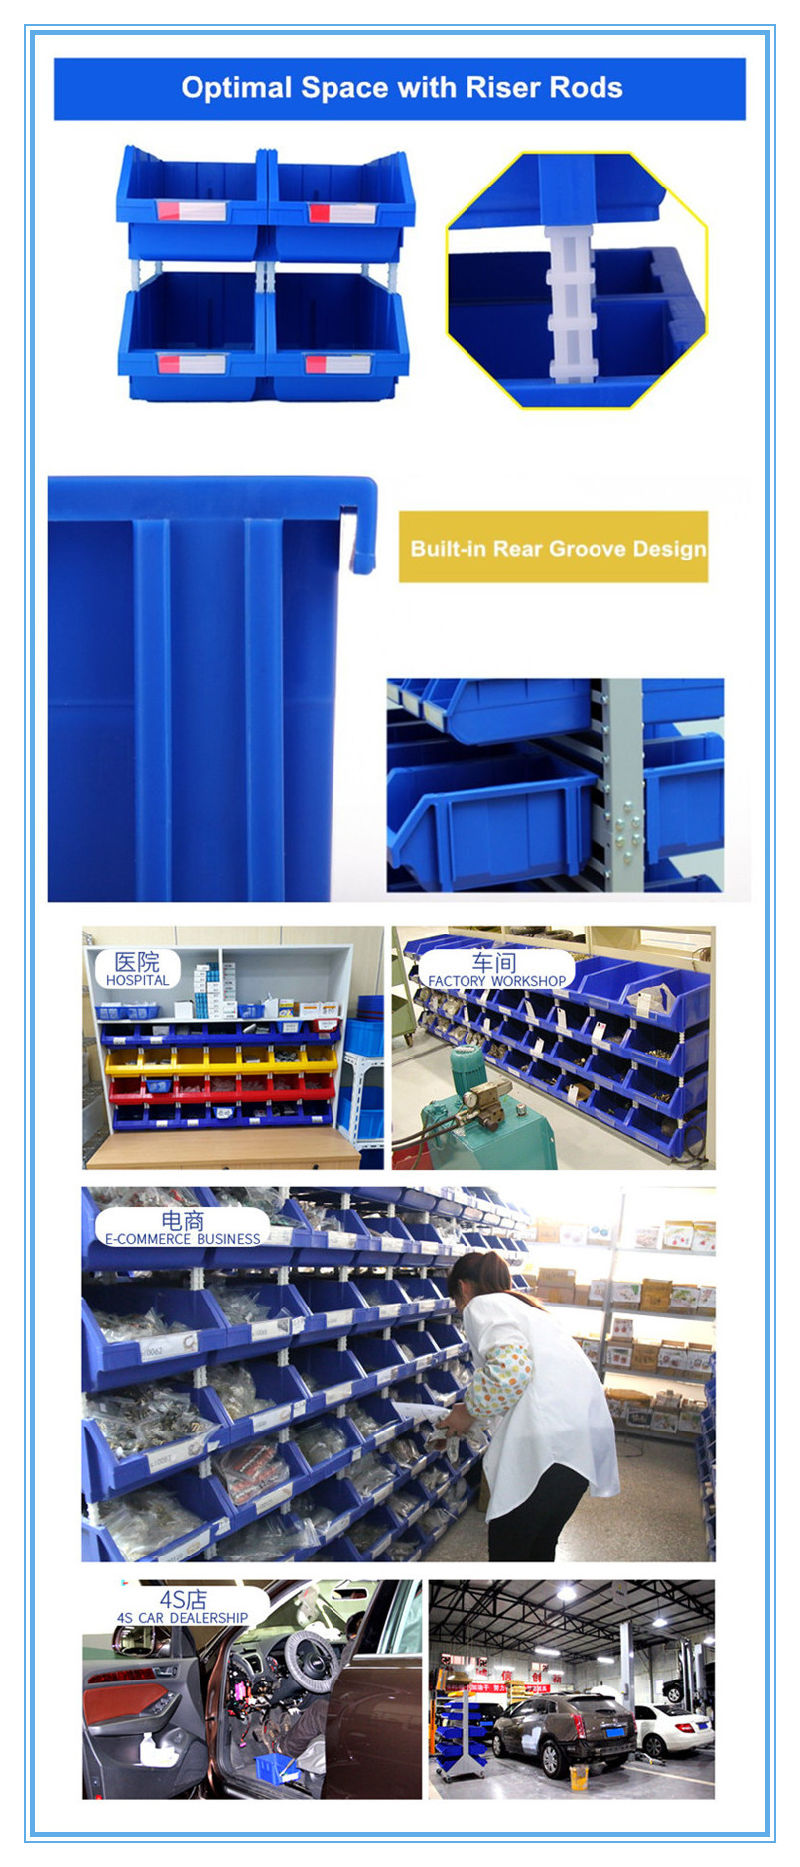 Stackable Plastic Bin, Storage Plastic Box (PK005)